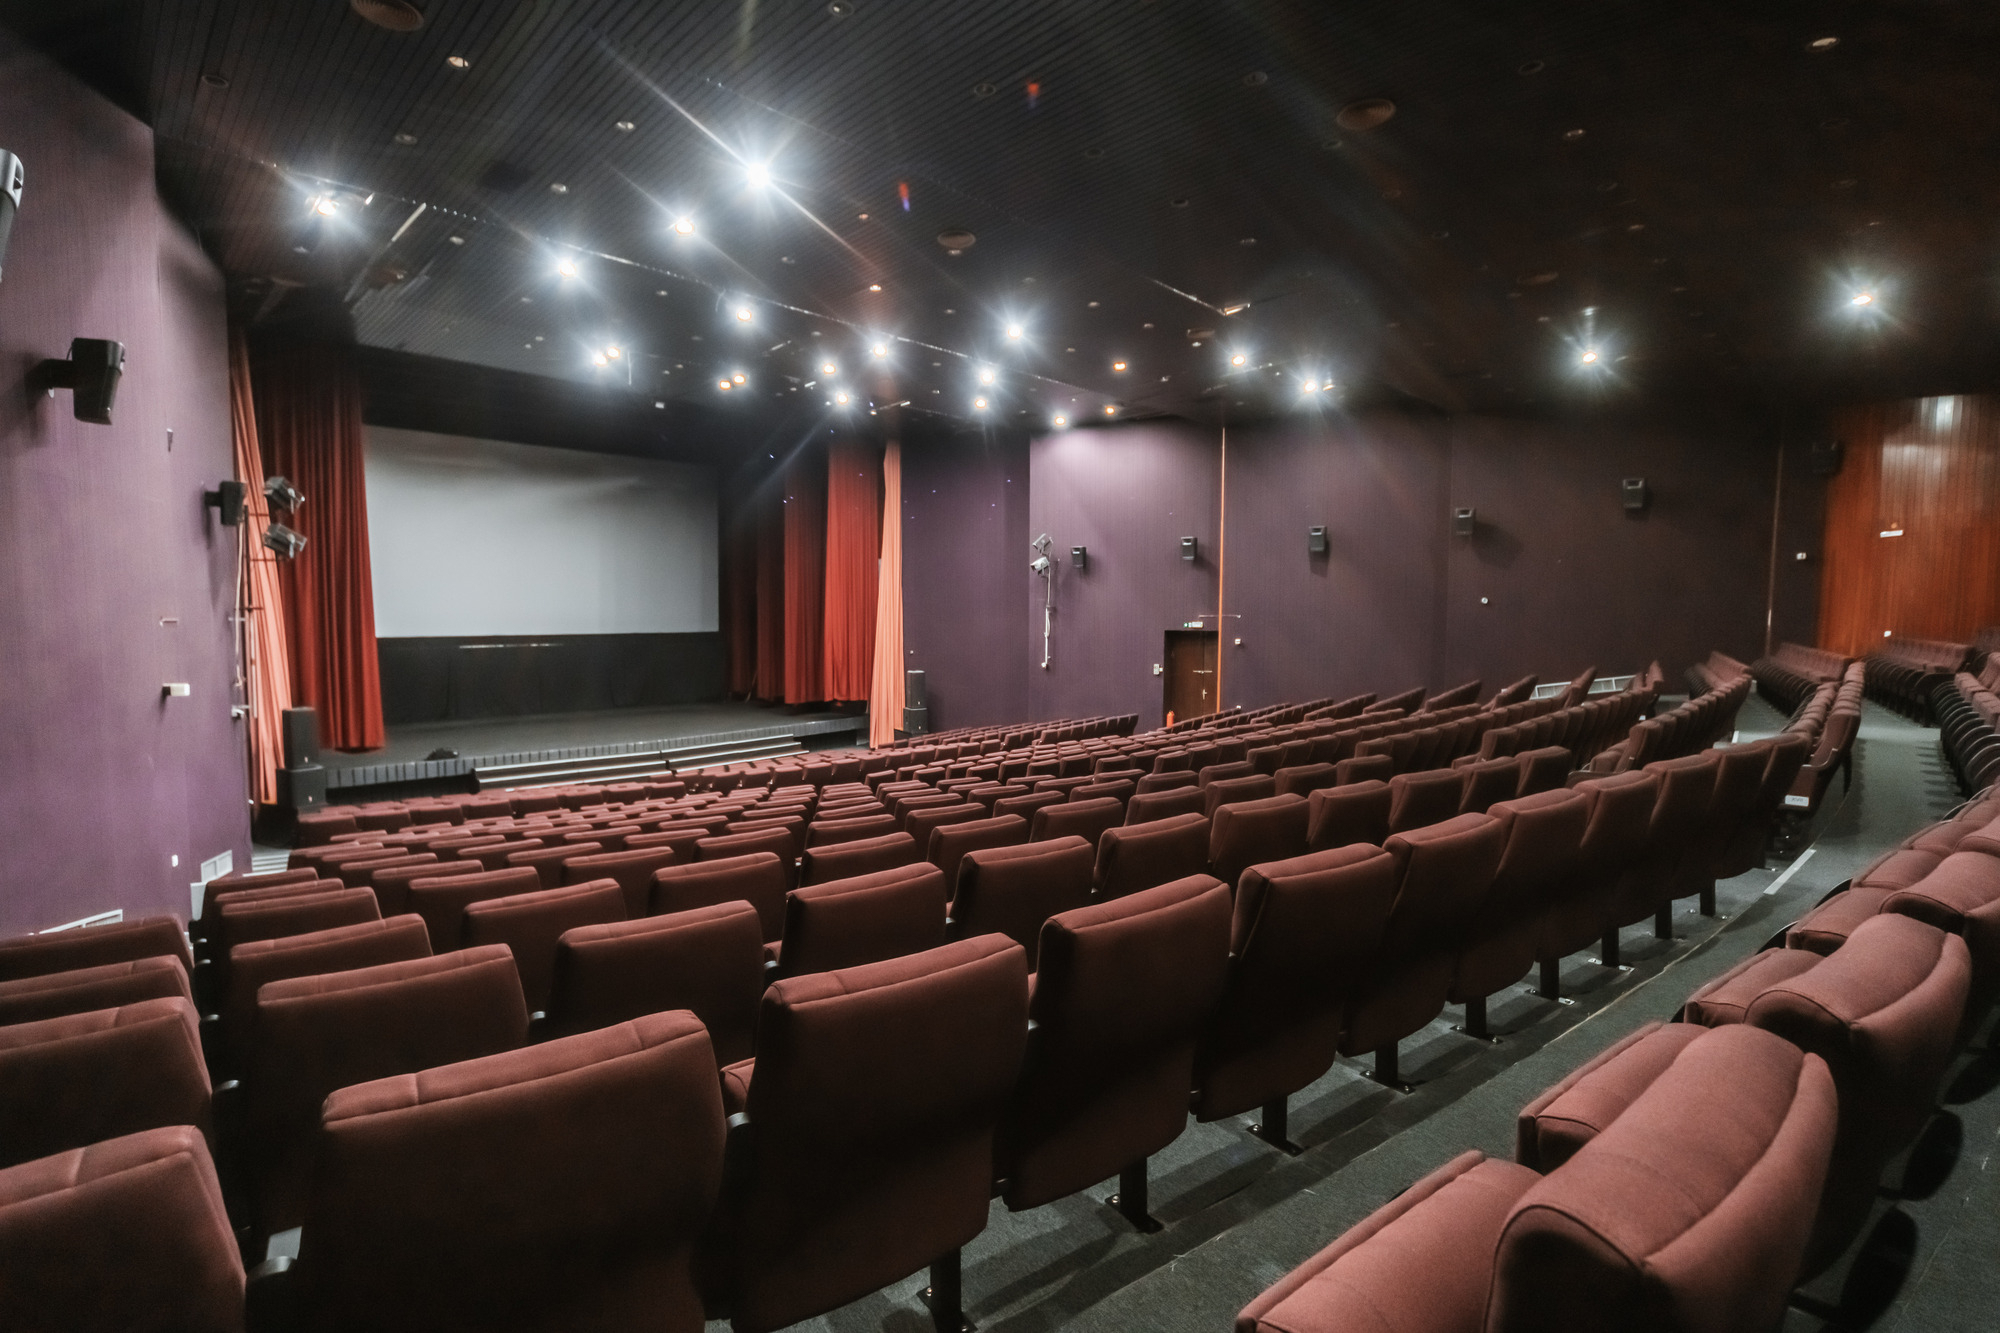 The interior of the cinema 1